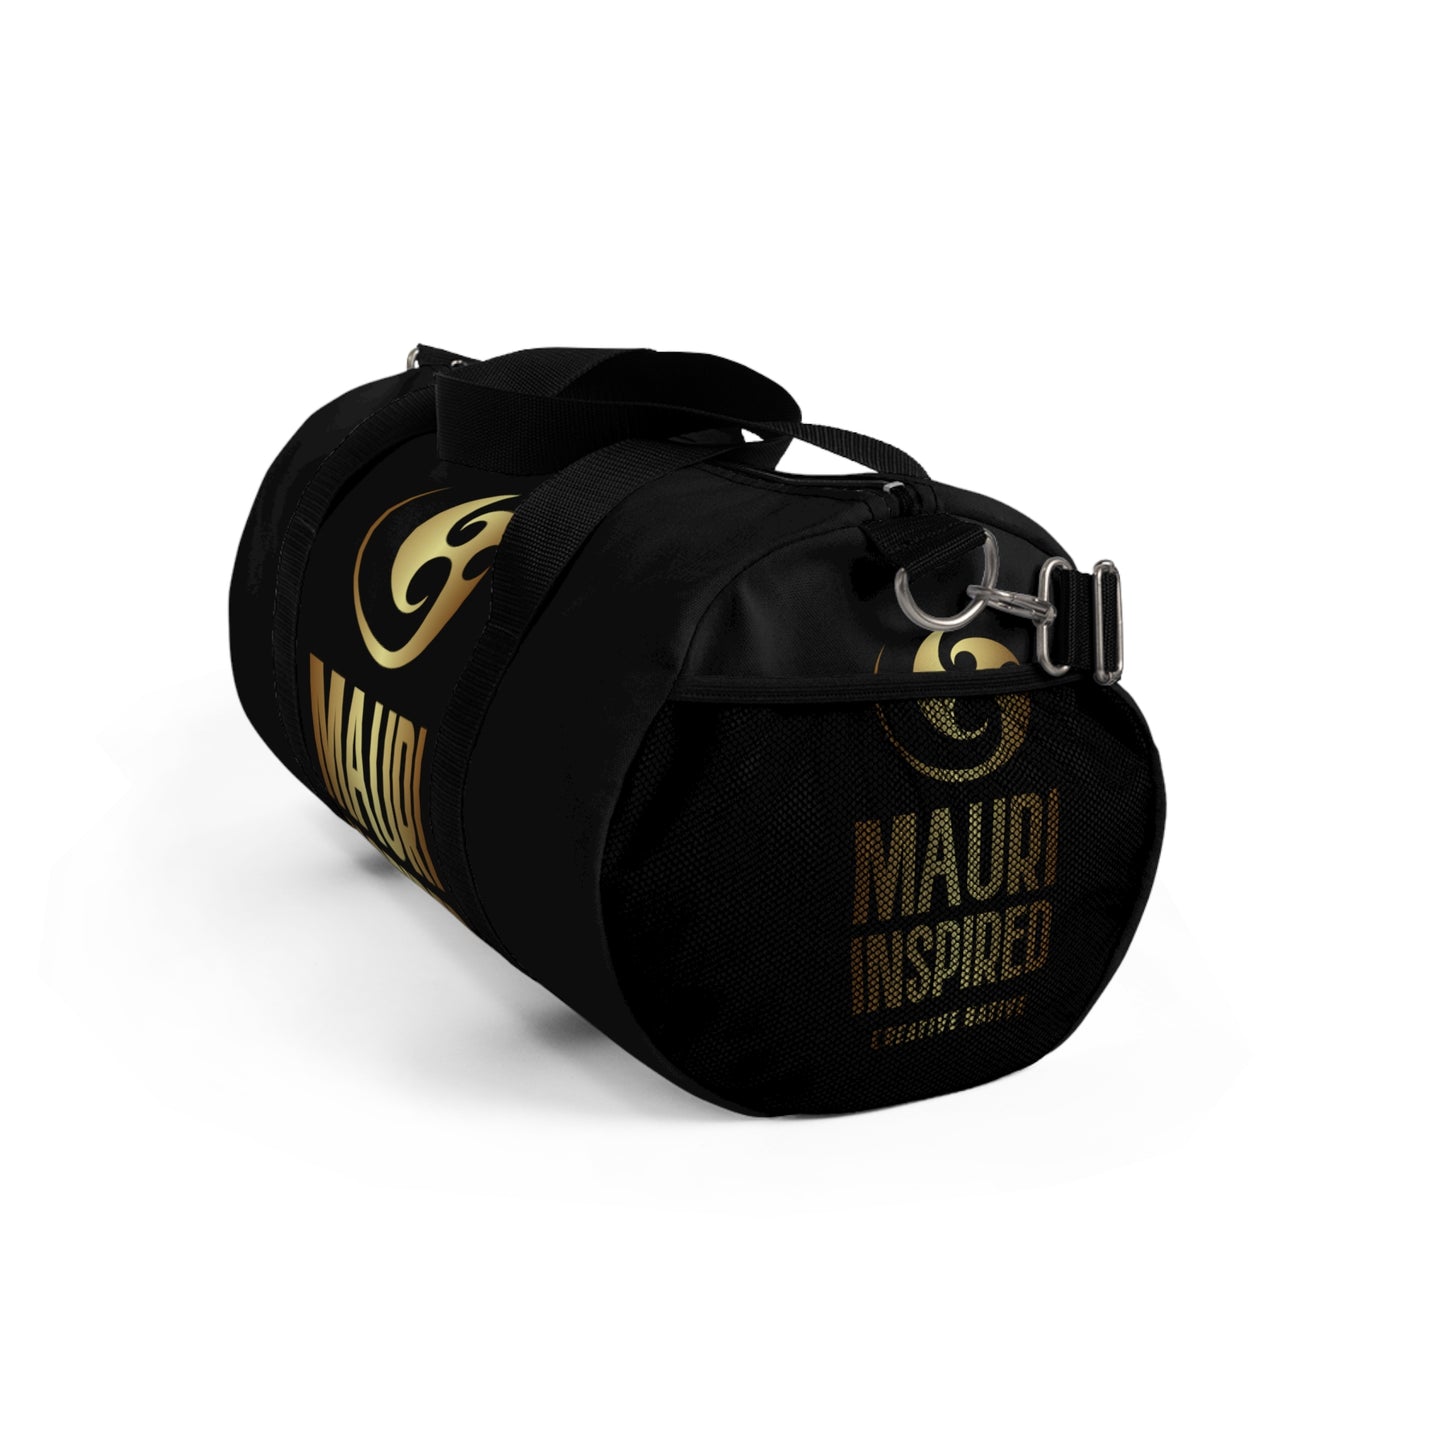 Mauri Inspired - Duffel Bag